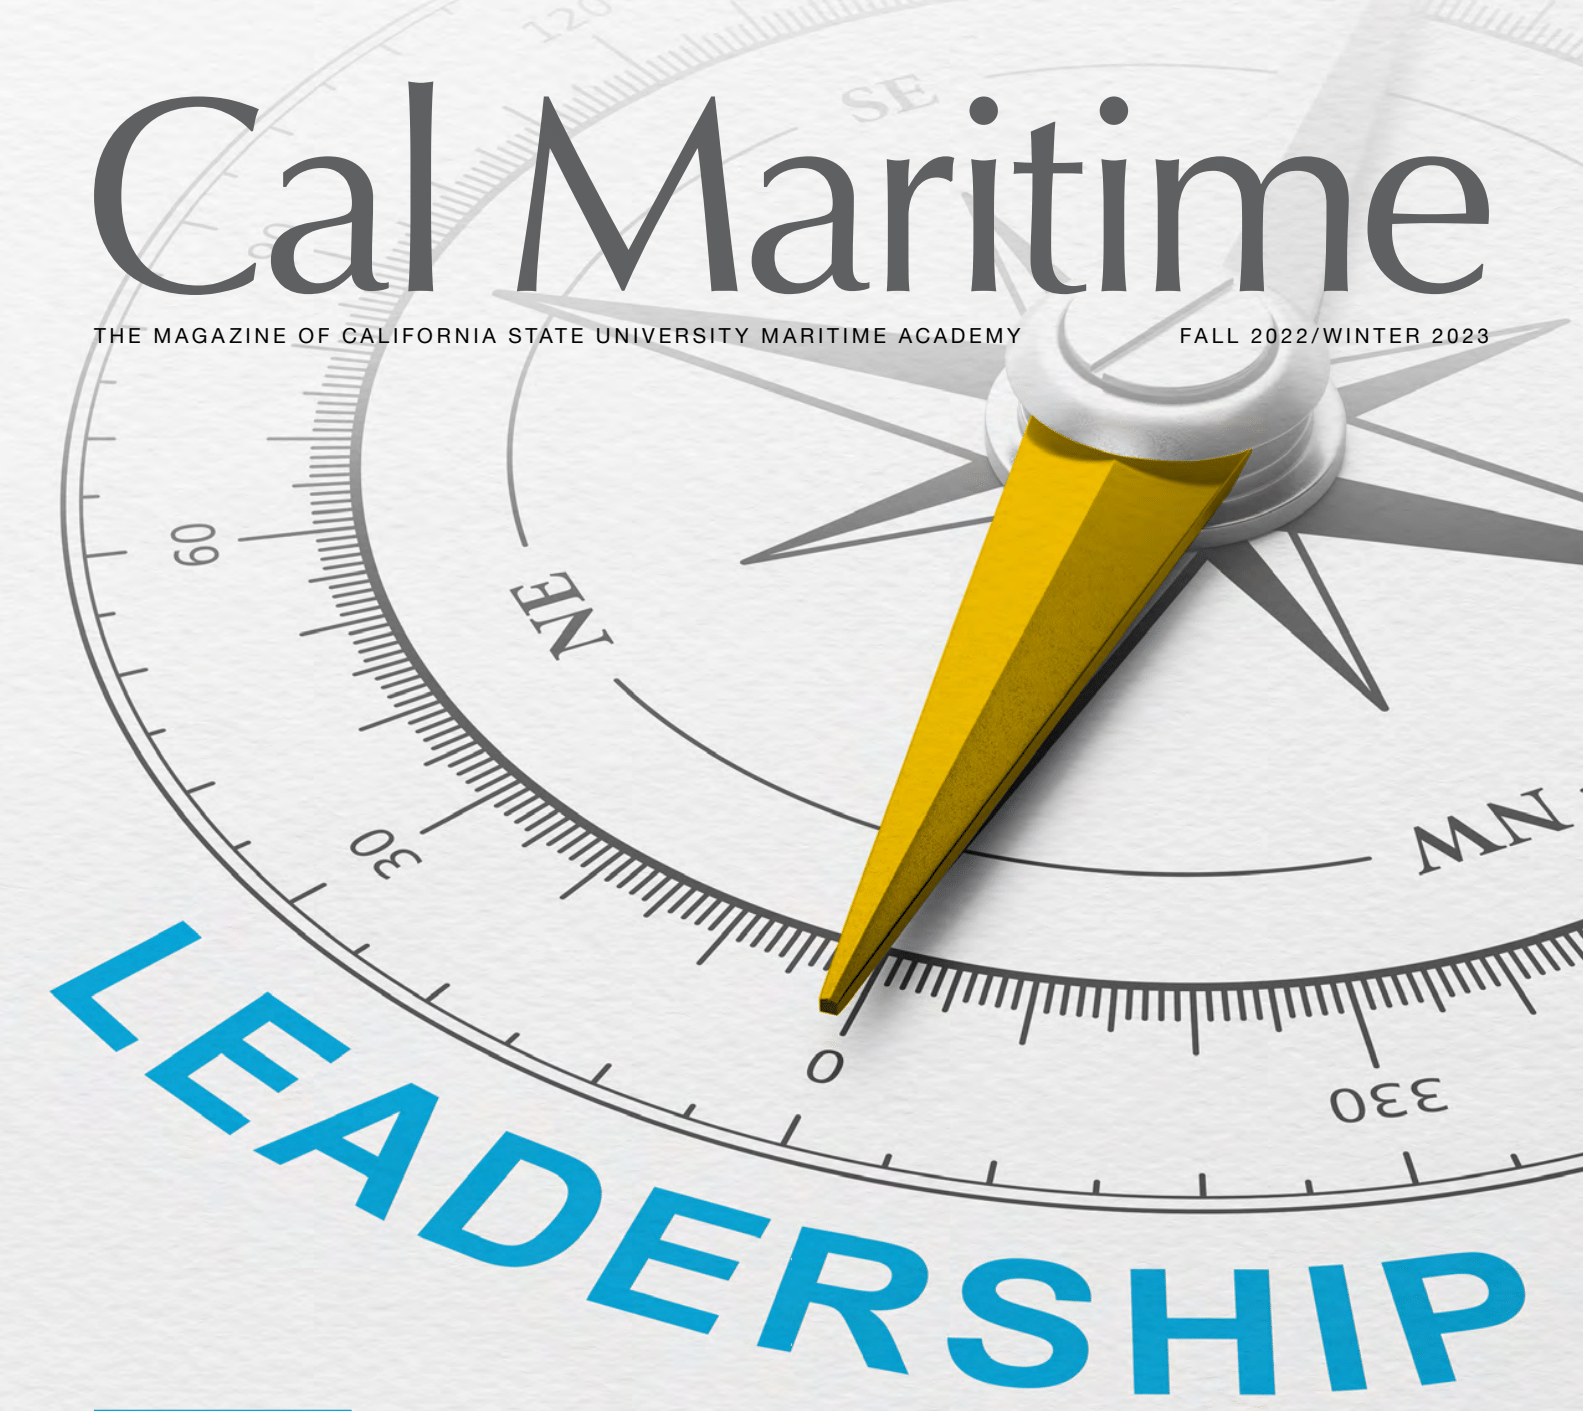 Cal Maritime Magazine Fall 2022/Winter 2023